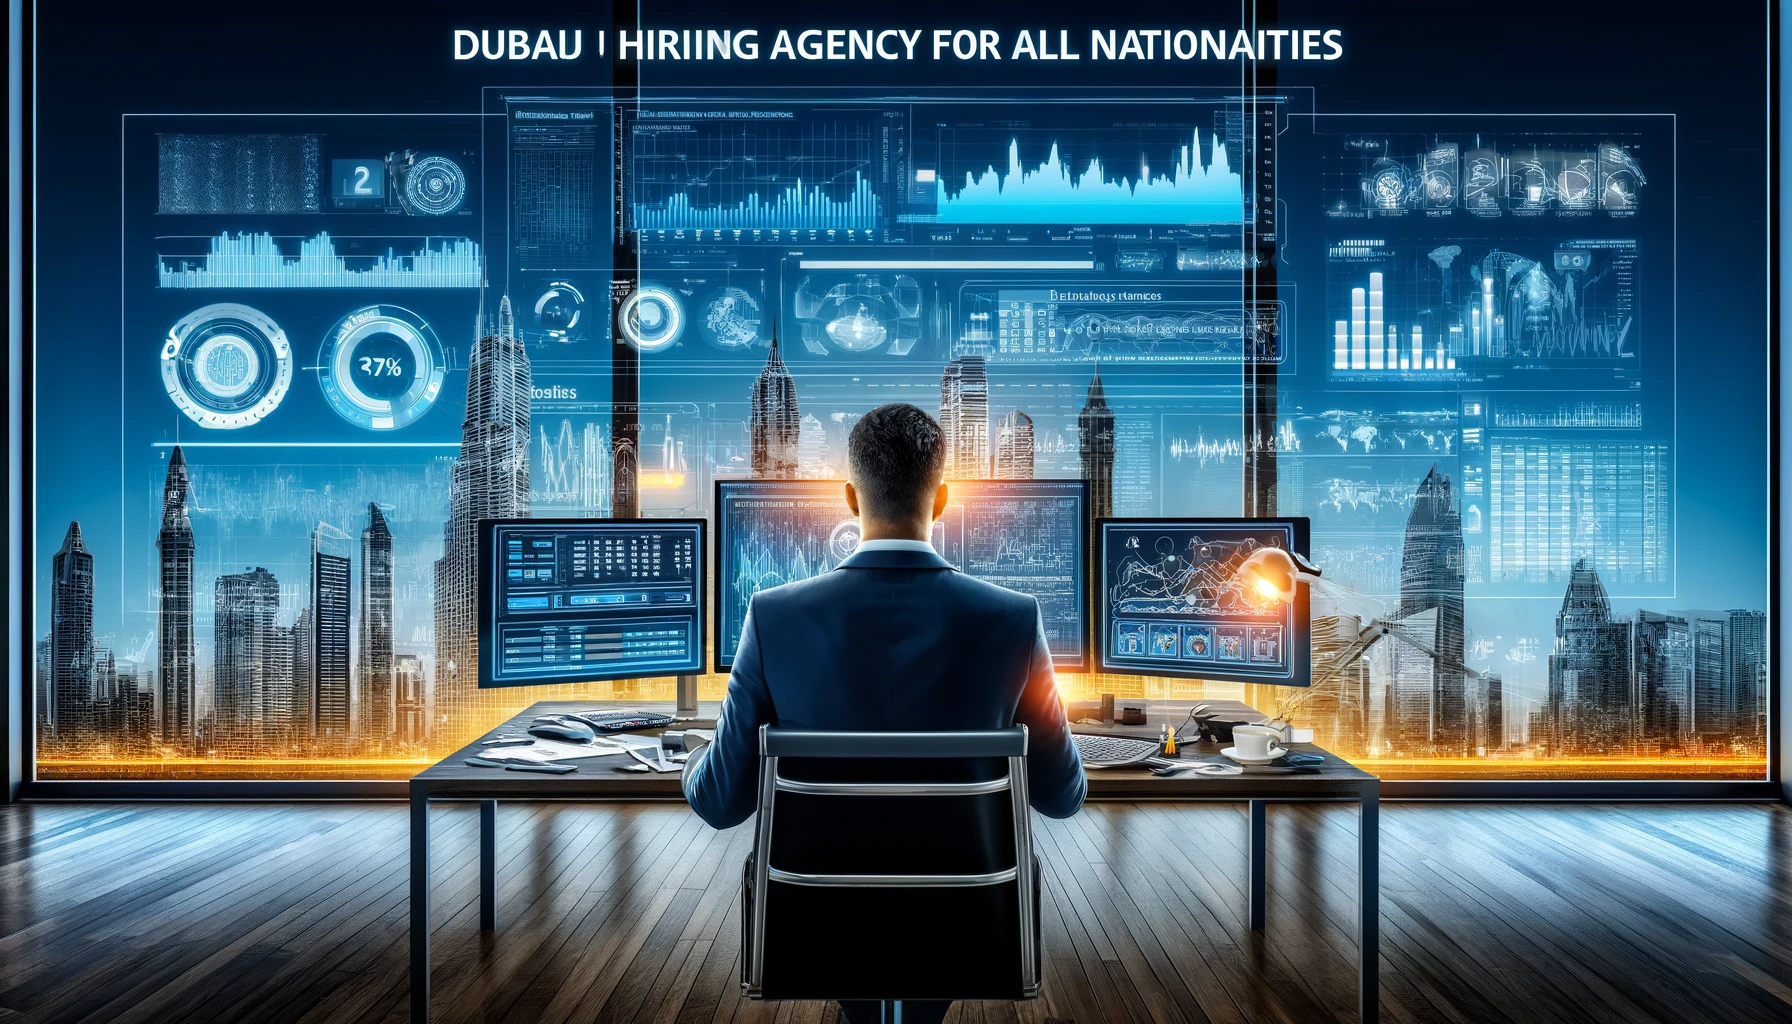 Dubai hiring agency for all nationalities